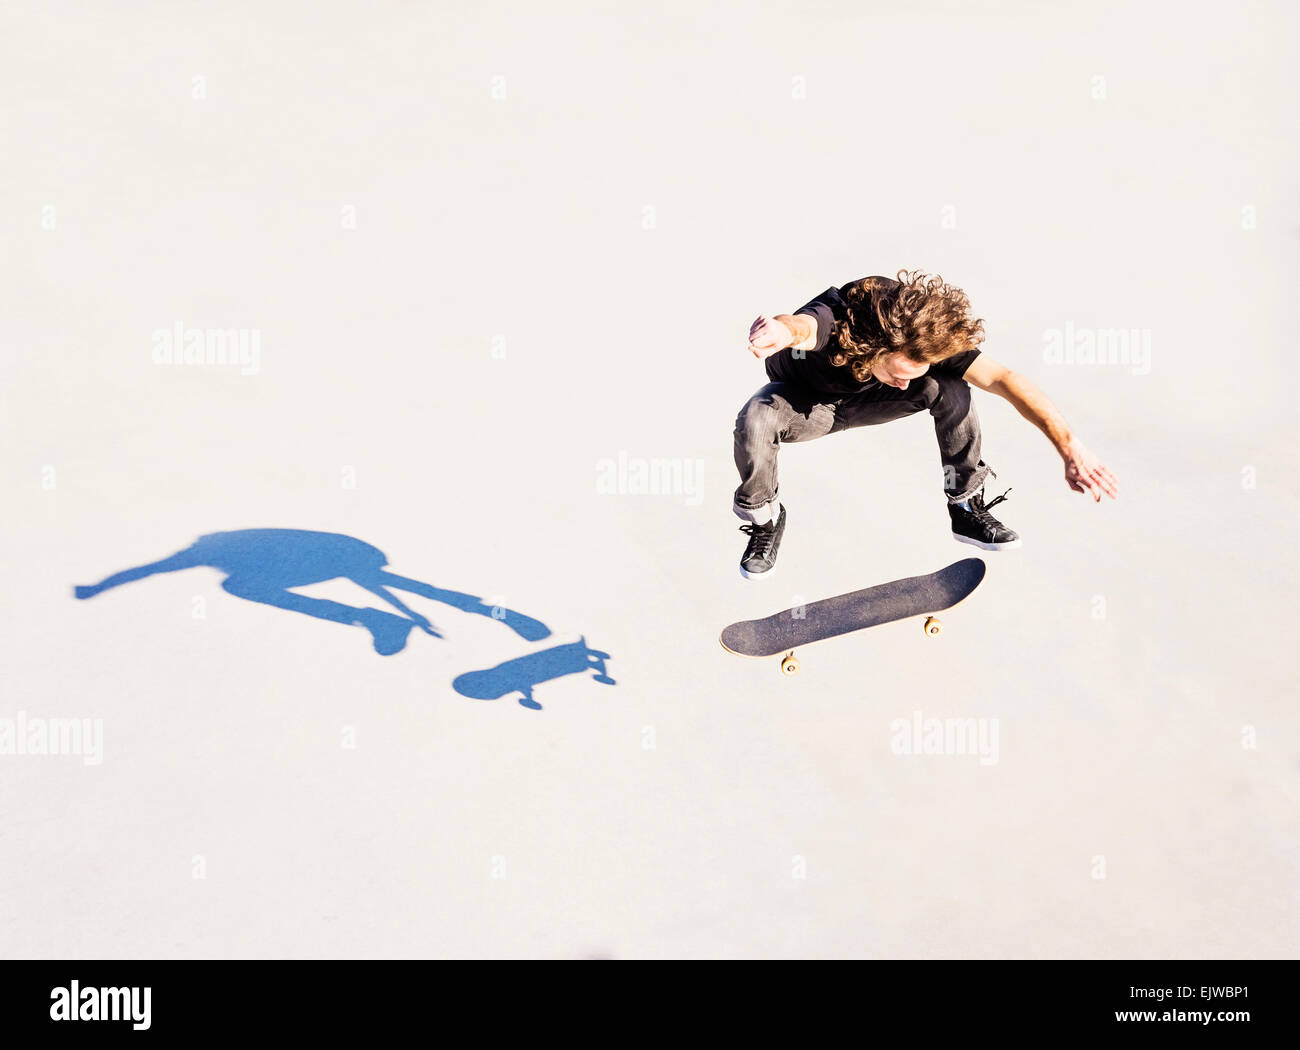 USA, Florida, West Palm Beach, Man jumping on skateboard in skatepark Stock Photo